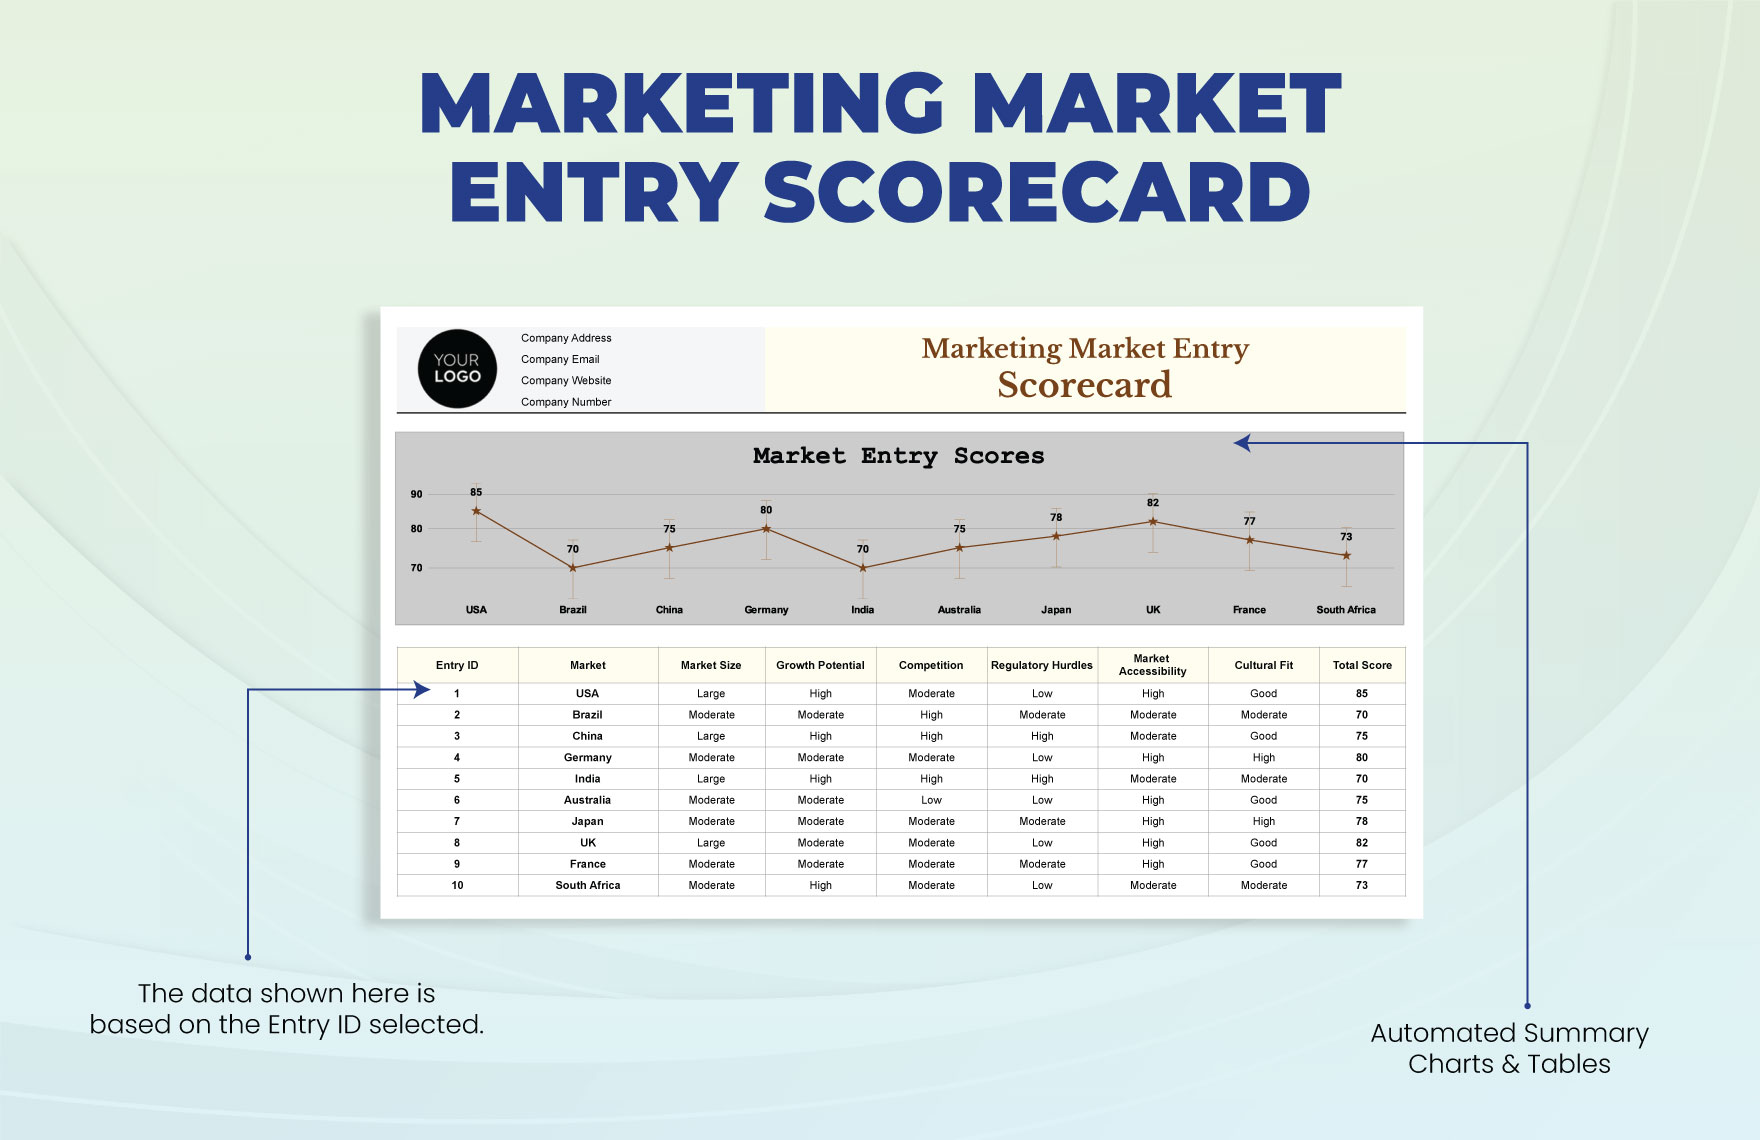 Marketing Market Entry Scorecard Template